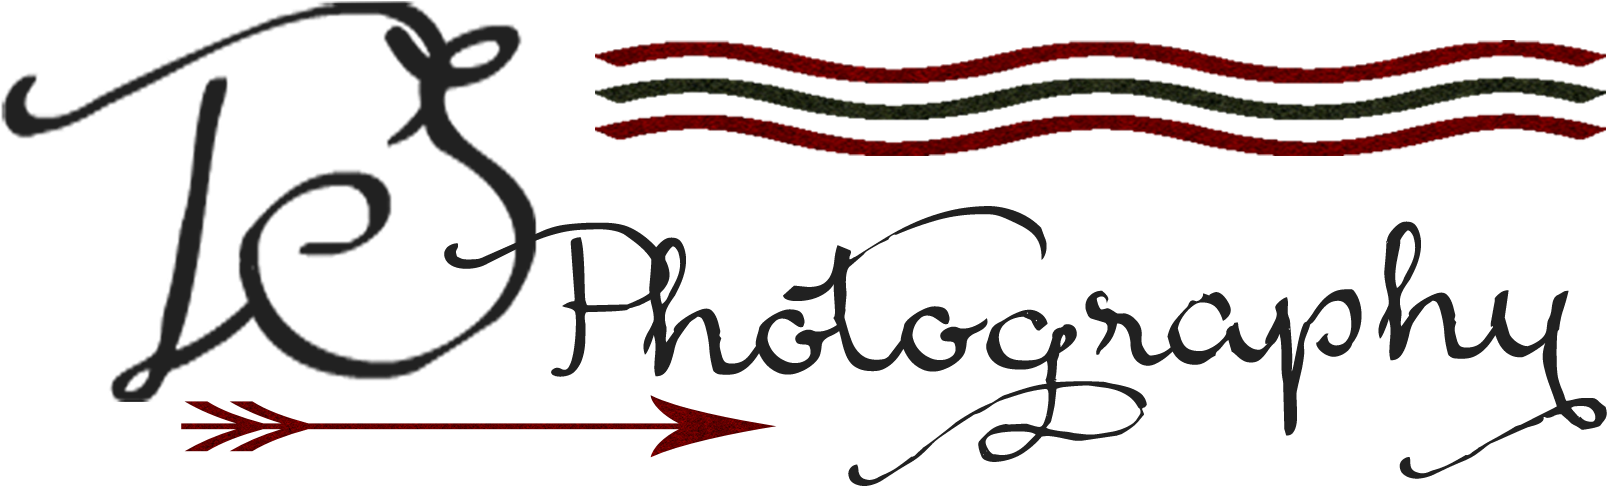 Sarah Toro - Ts Photography Logo Png (1800x1200), Png Download